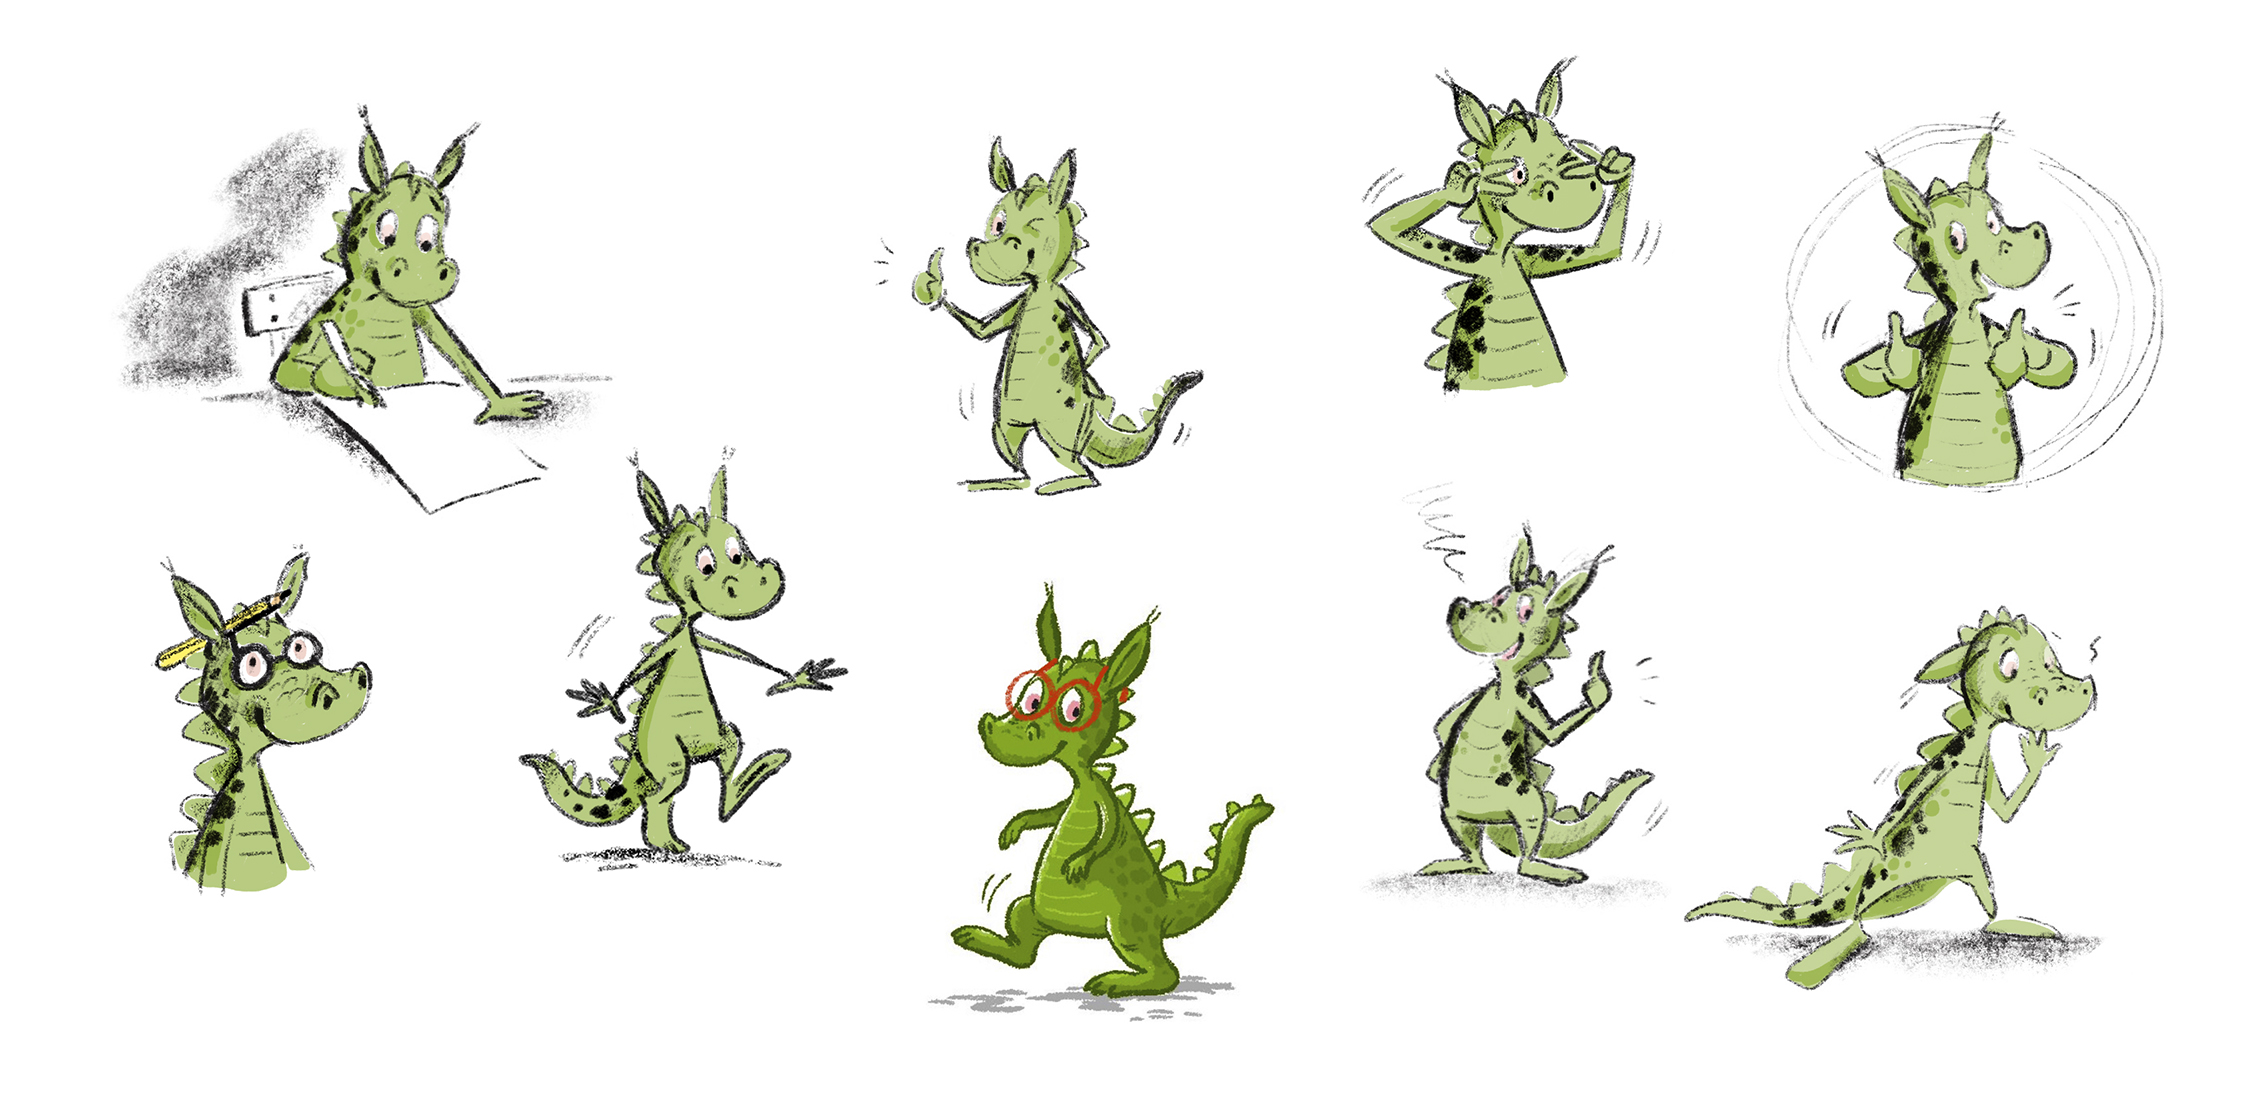 Dragon Sketches